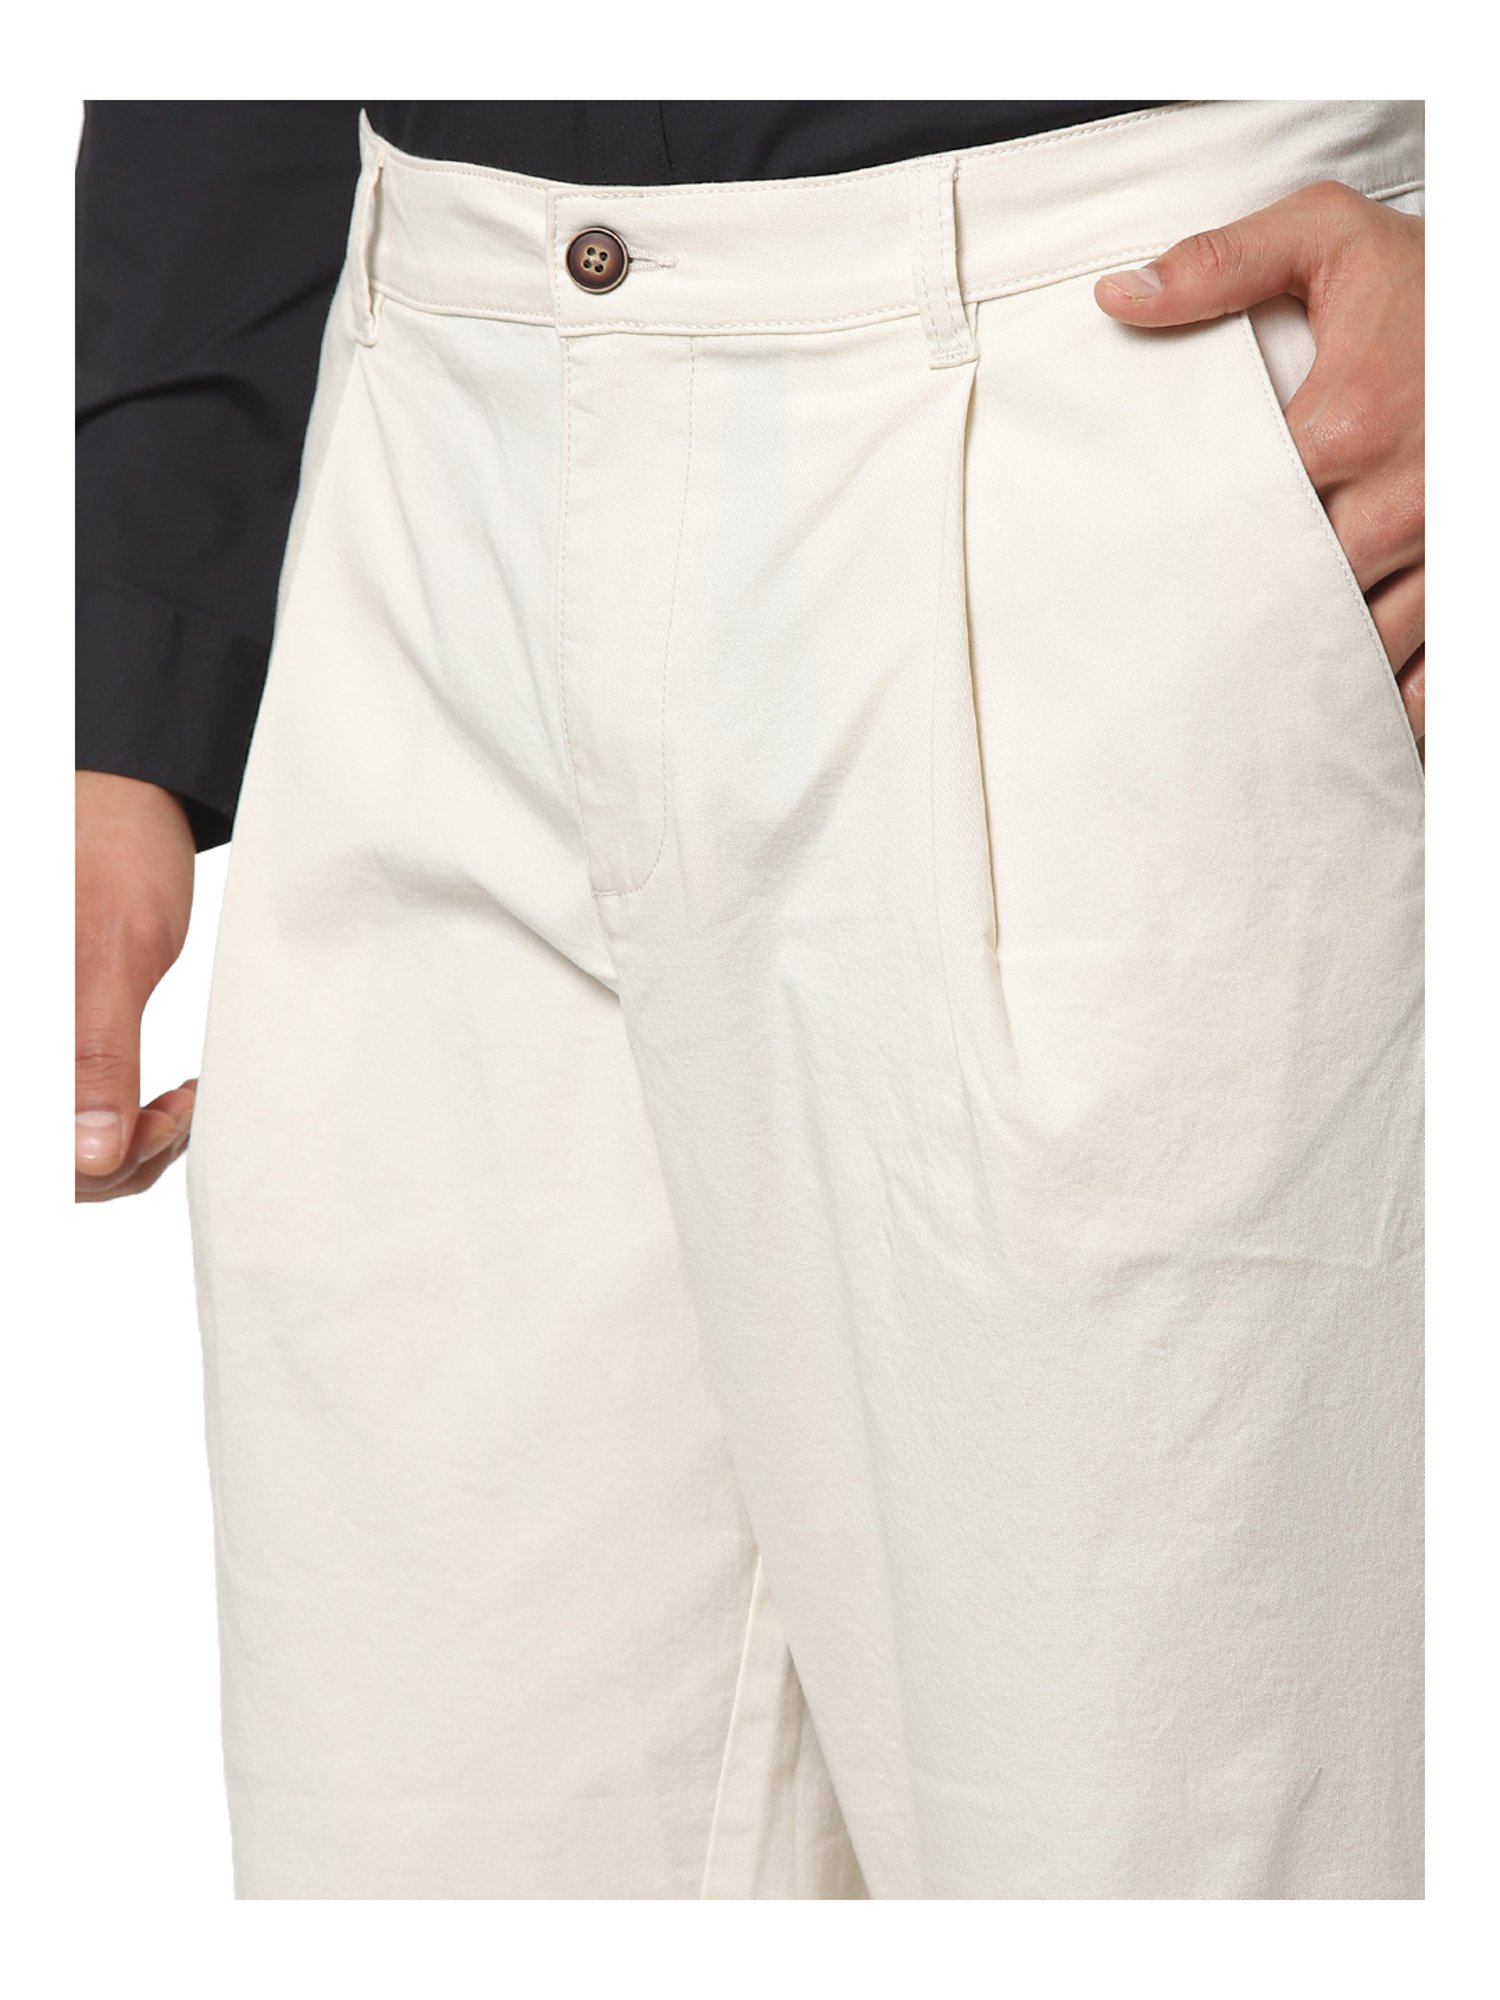 White corduroy trousers BRIGLIA 1949 FW 2223  Rione Fontana